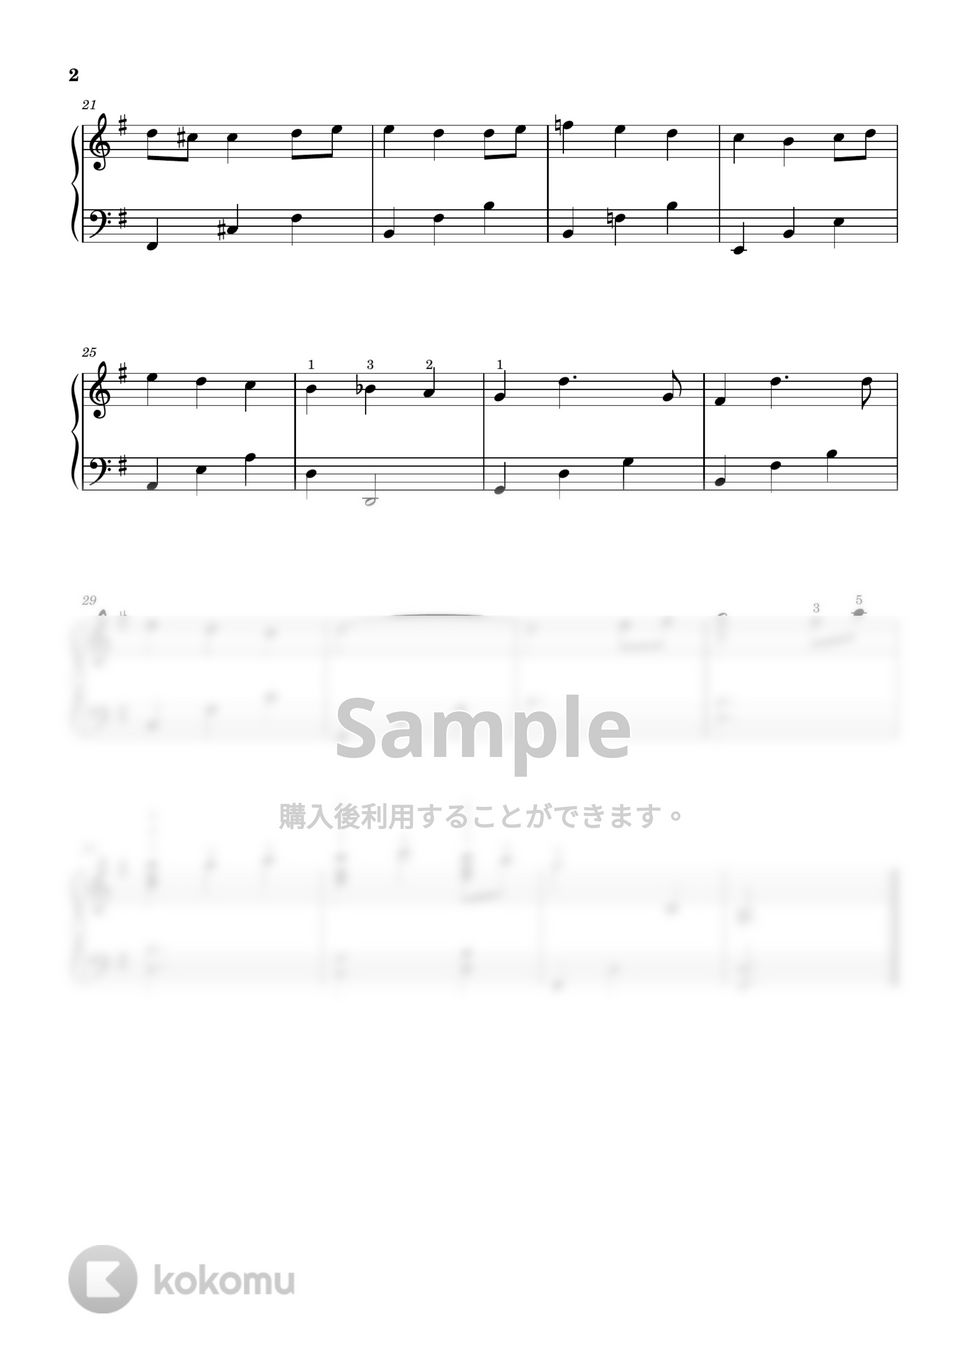 Hisaishi Joe - ふたたび (千と千尋の神隠し OST) by Hellopiano